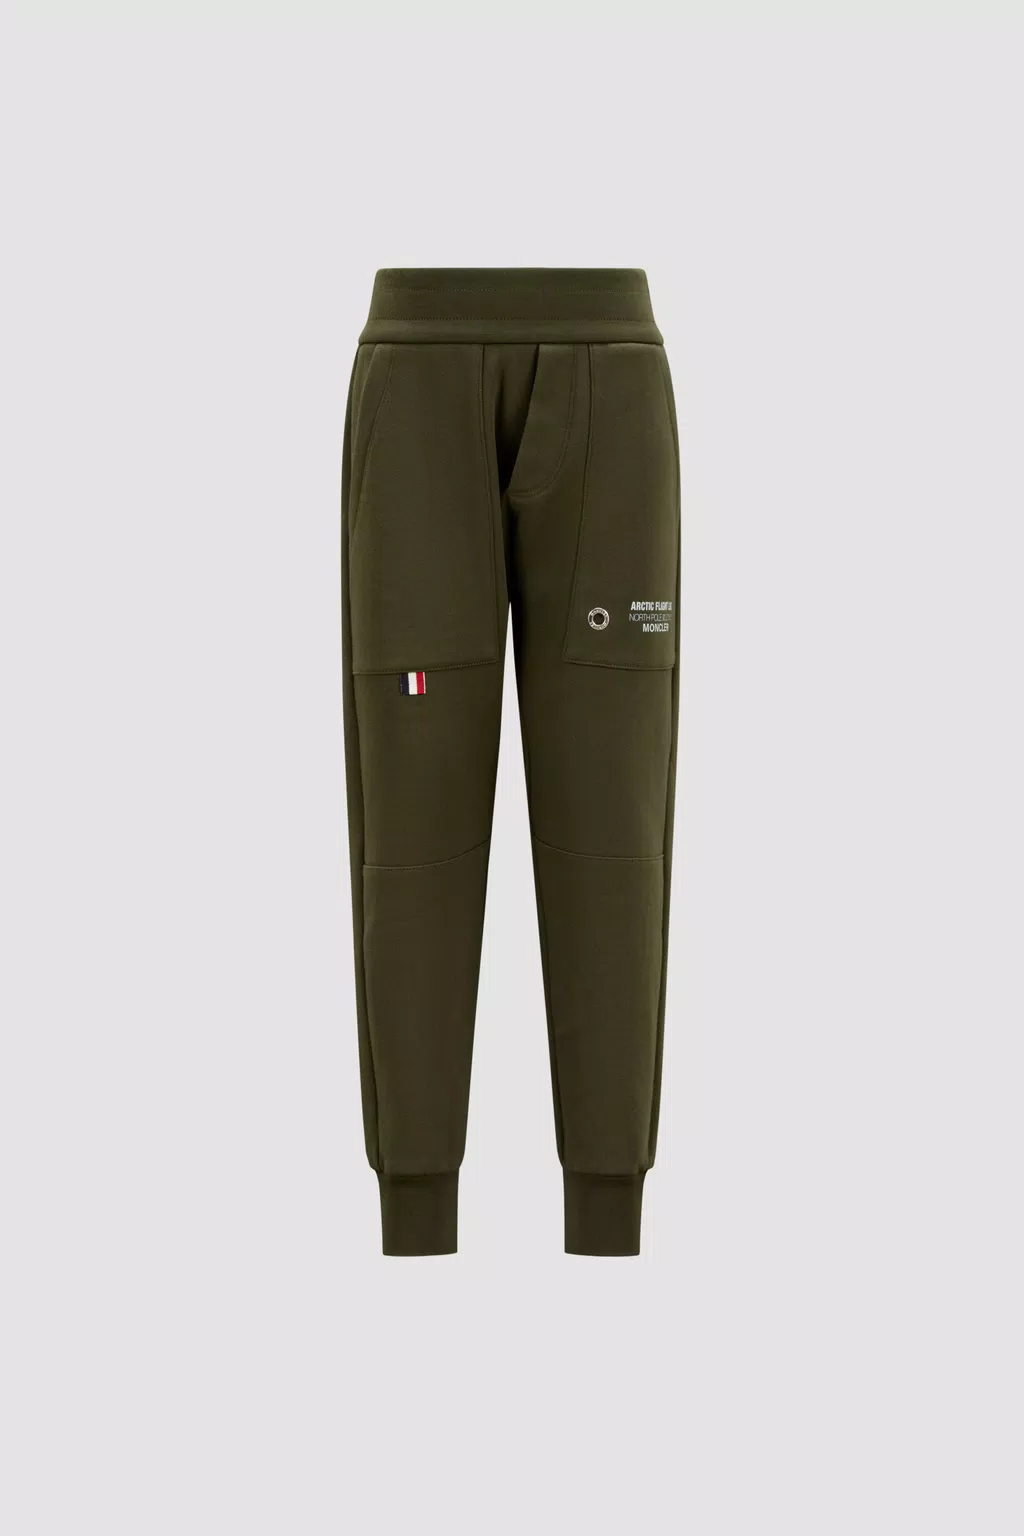 Pantalones deportivos suaves Niño Verde Bosque Moncler 1